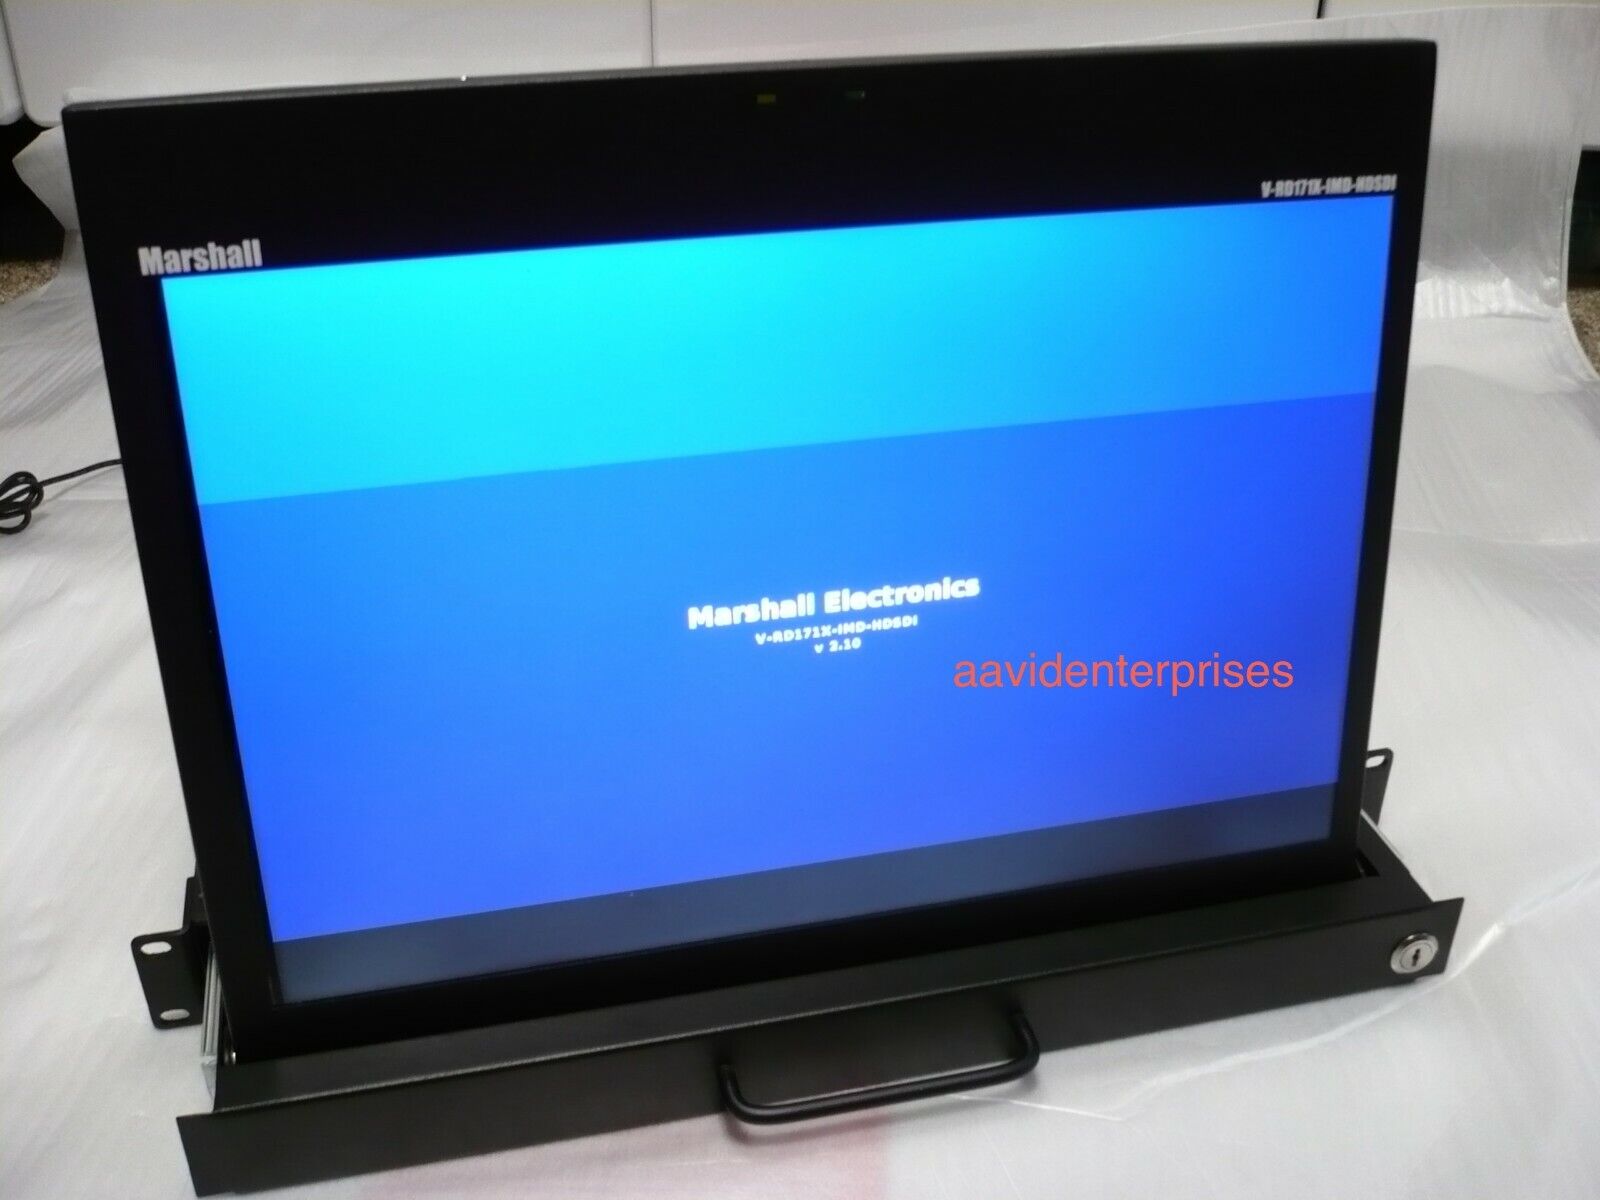 Marshall V-RD171X IMD-HDSDI 1RU drawer/rack mountable 17" LCD monitor, Flanders